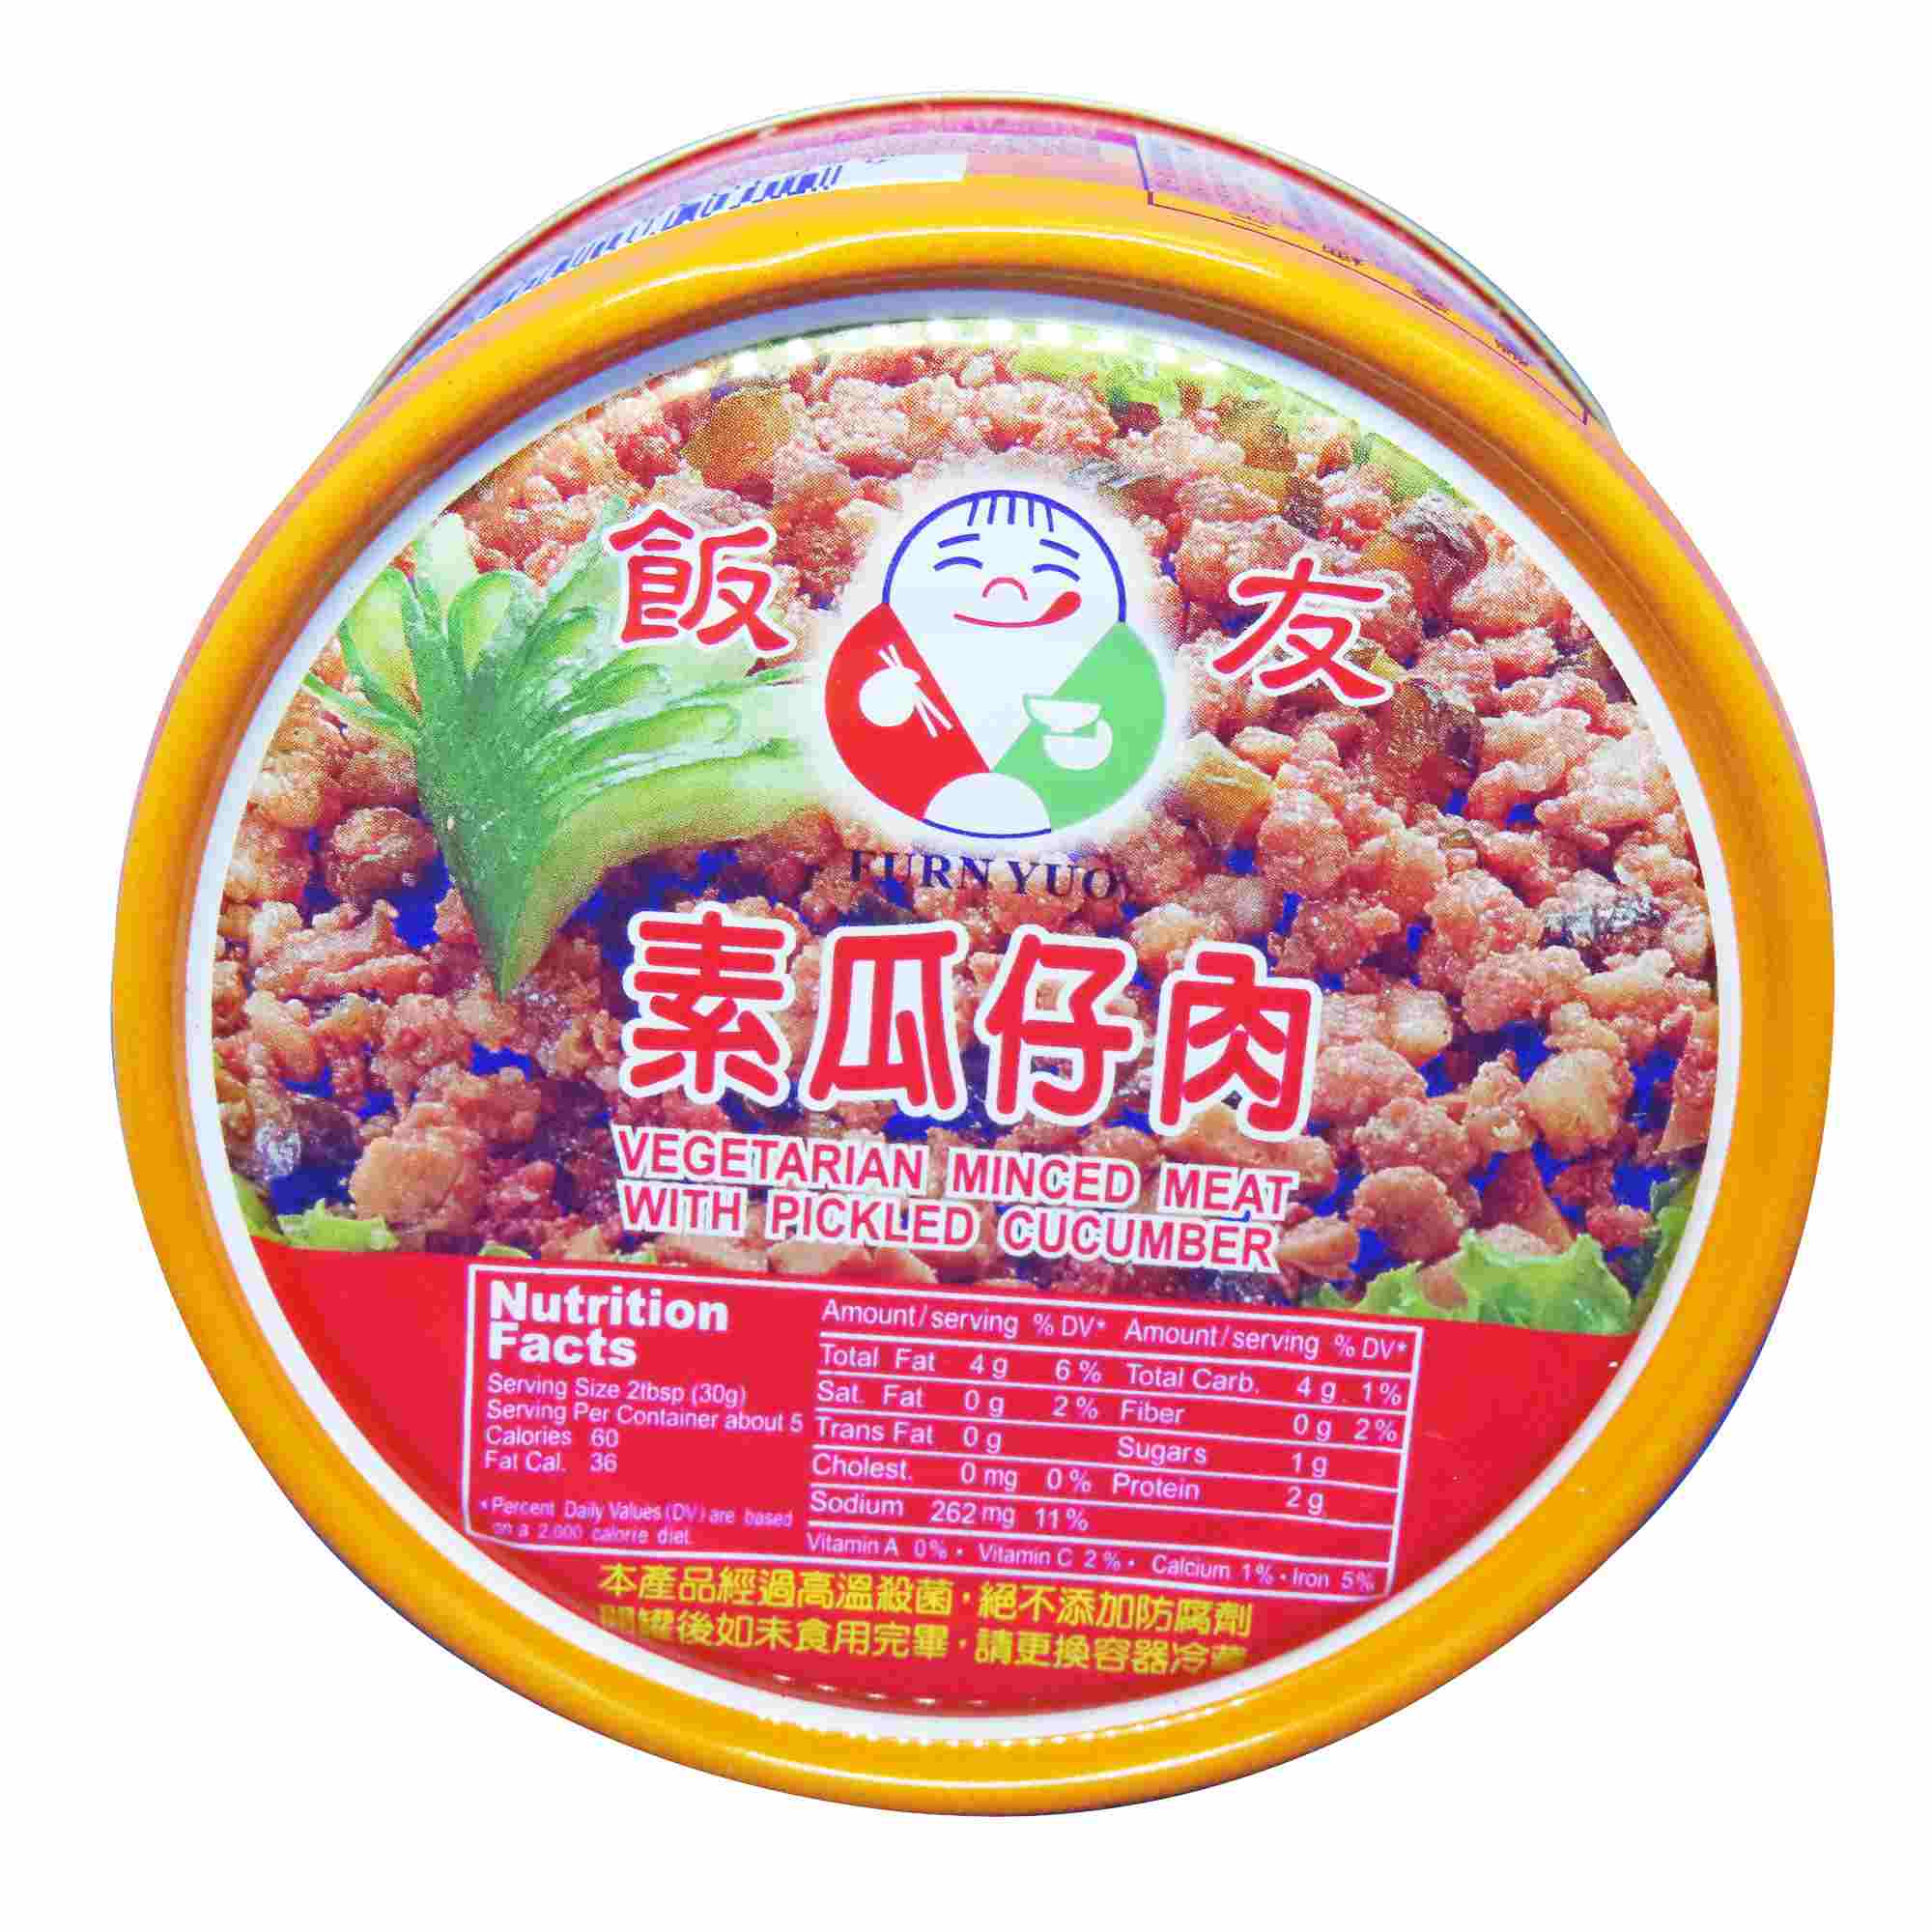 Image Vege Minced Meat 饭友 - 瓜仔肉 150grams